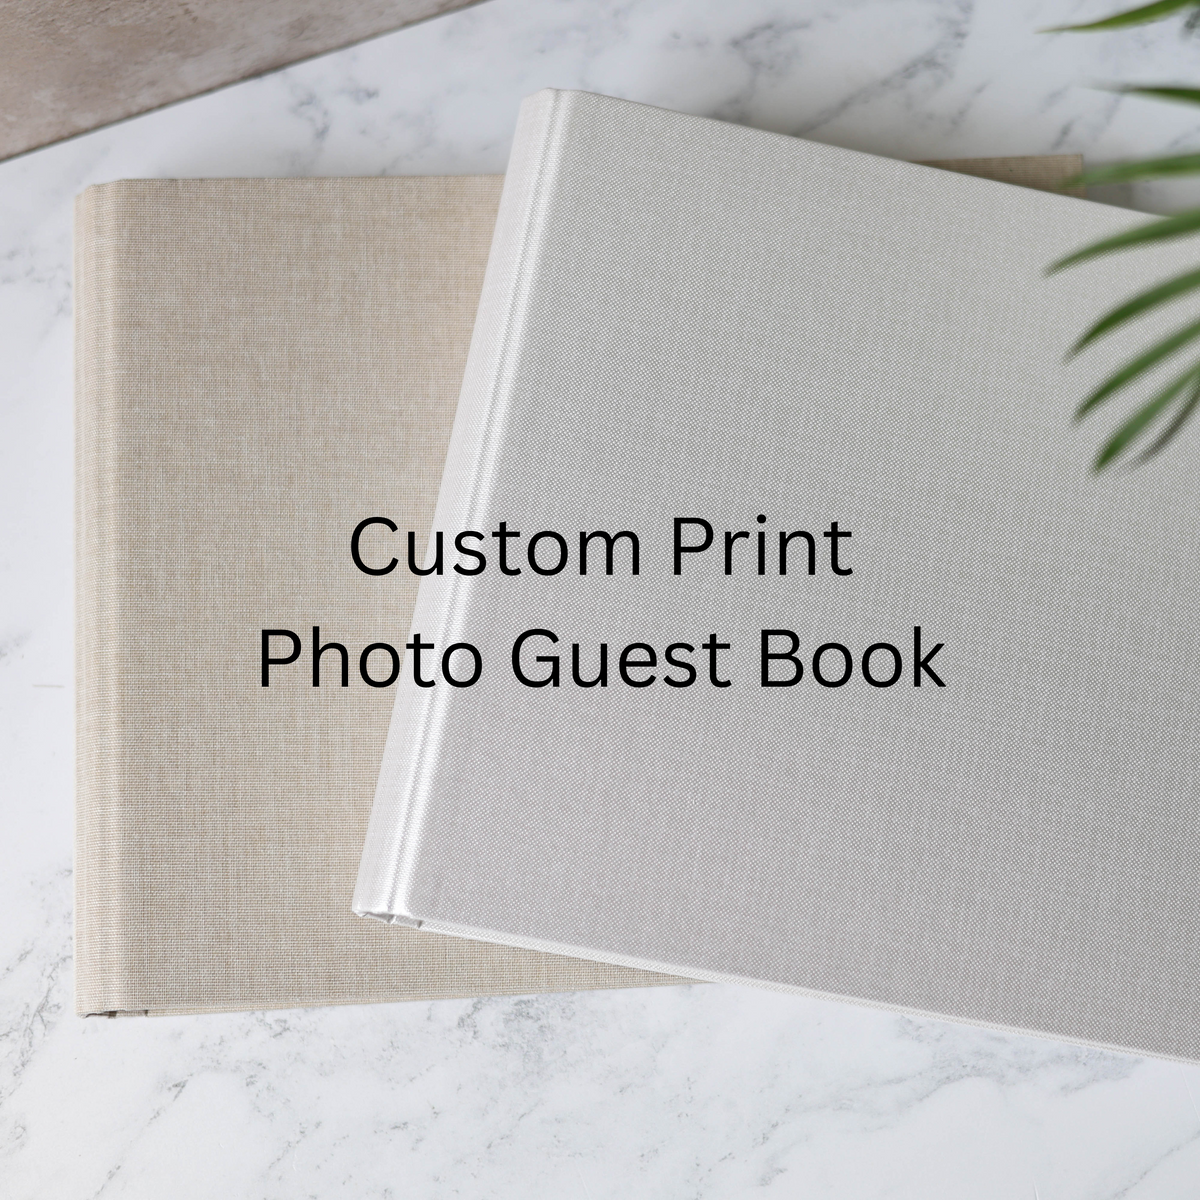 Custom print Photo Guest Book